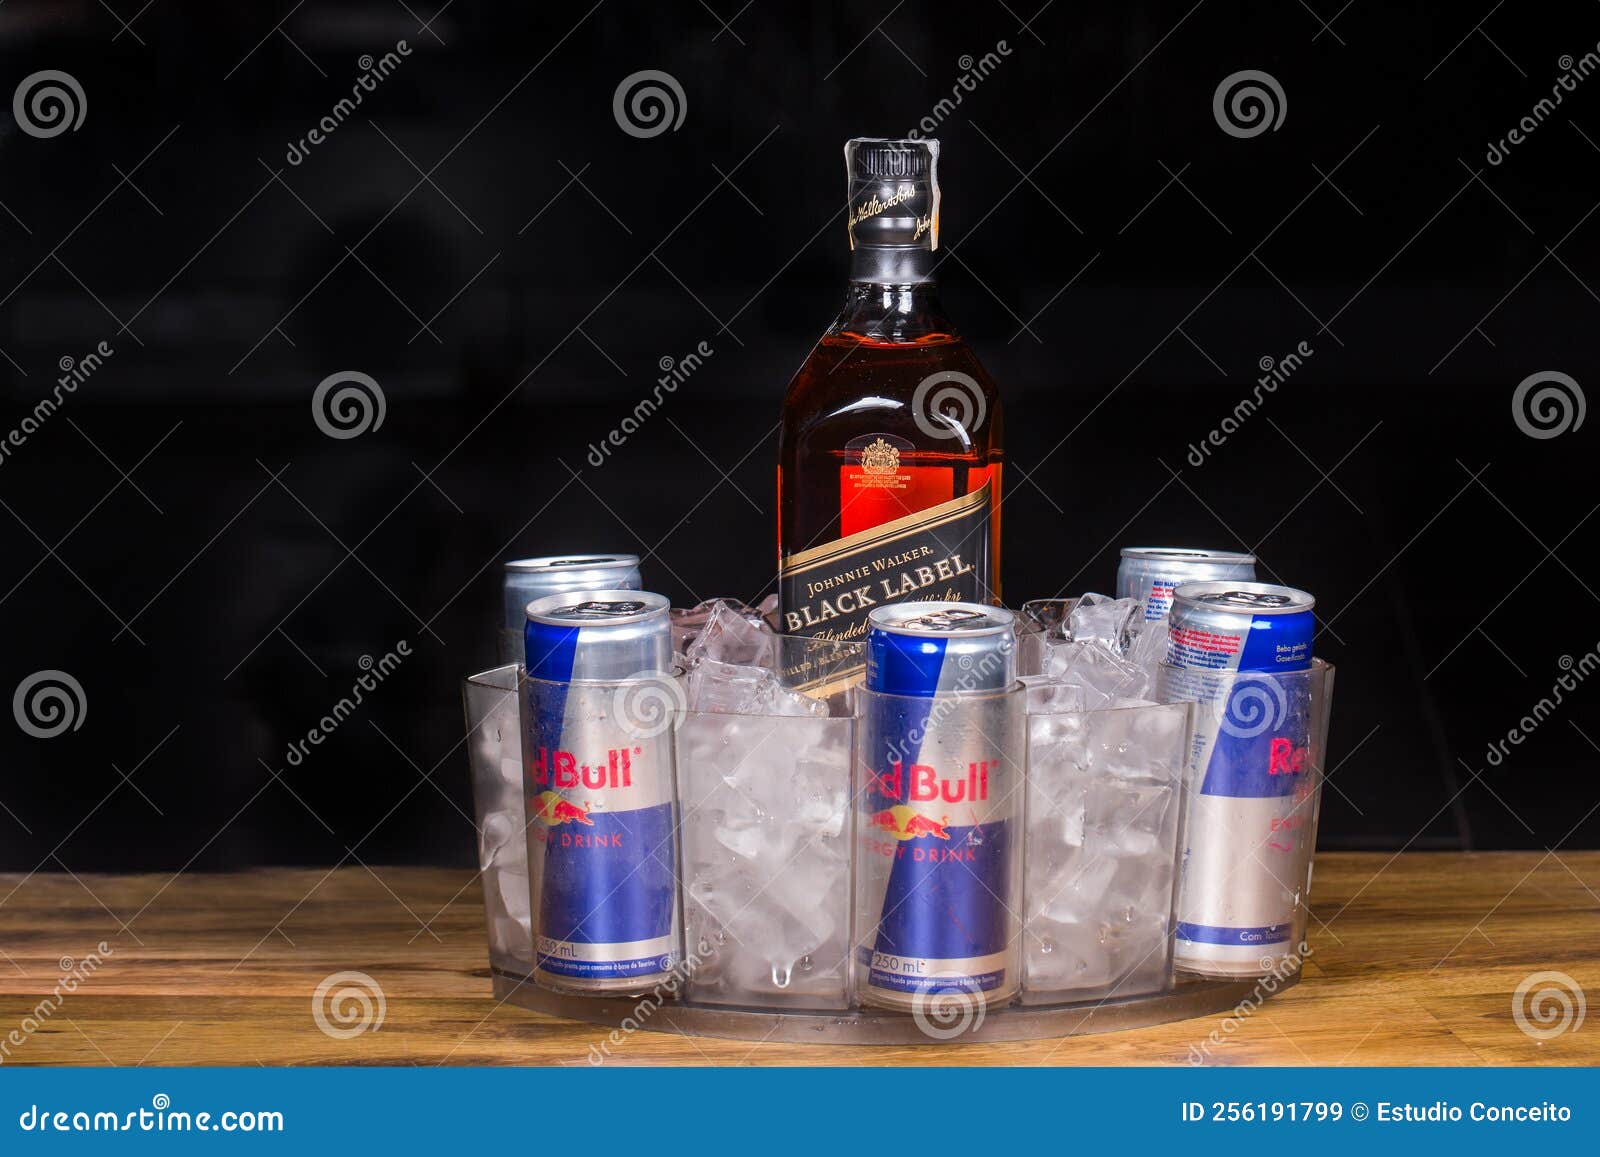 Rio De RJ, Brazil. 07.01.2022 Editorial Stock Image - Image of alcohol, american: 256191799